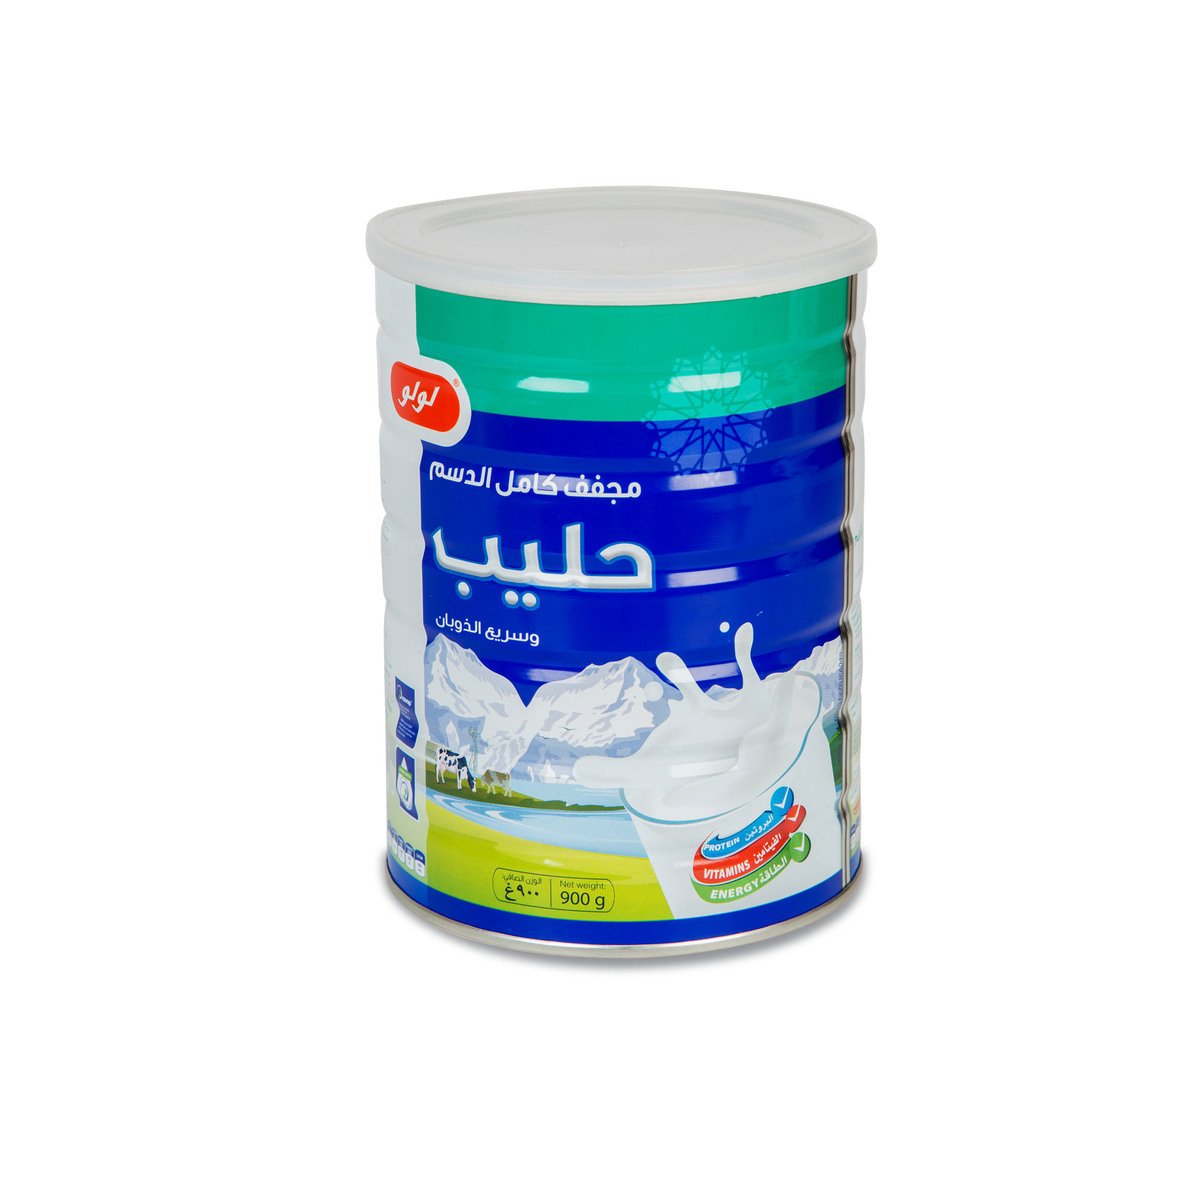 LuLu Full Cream Milk Powder 900g